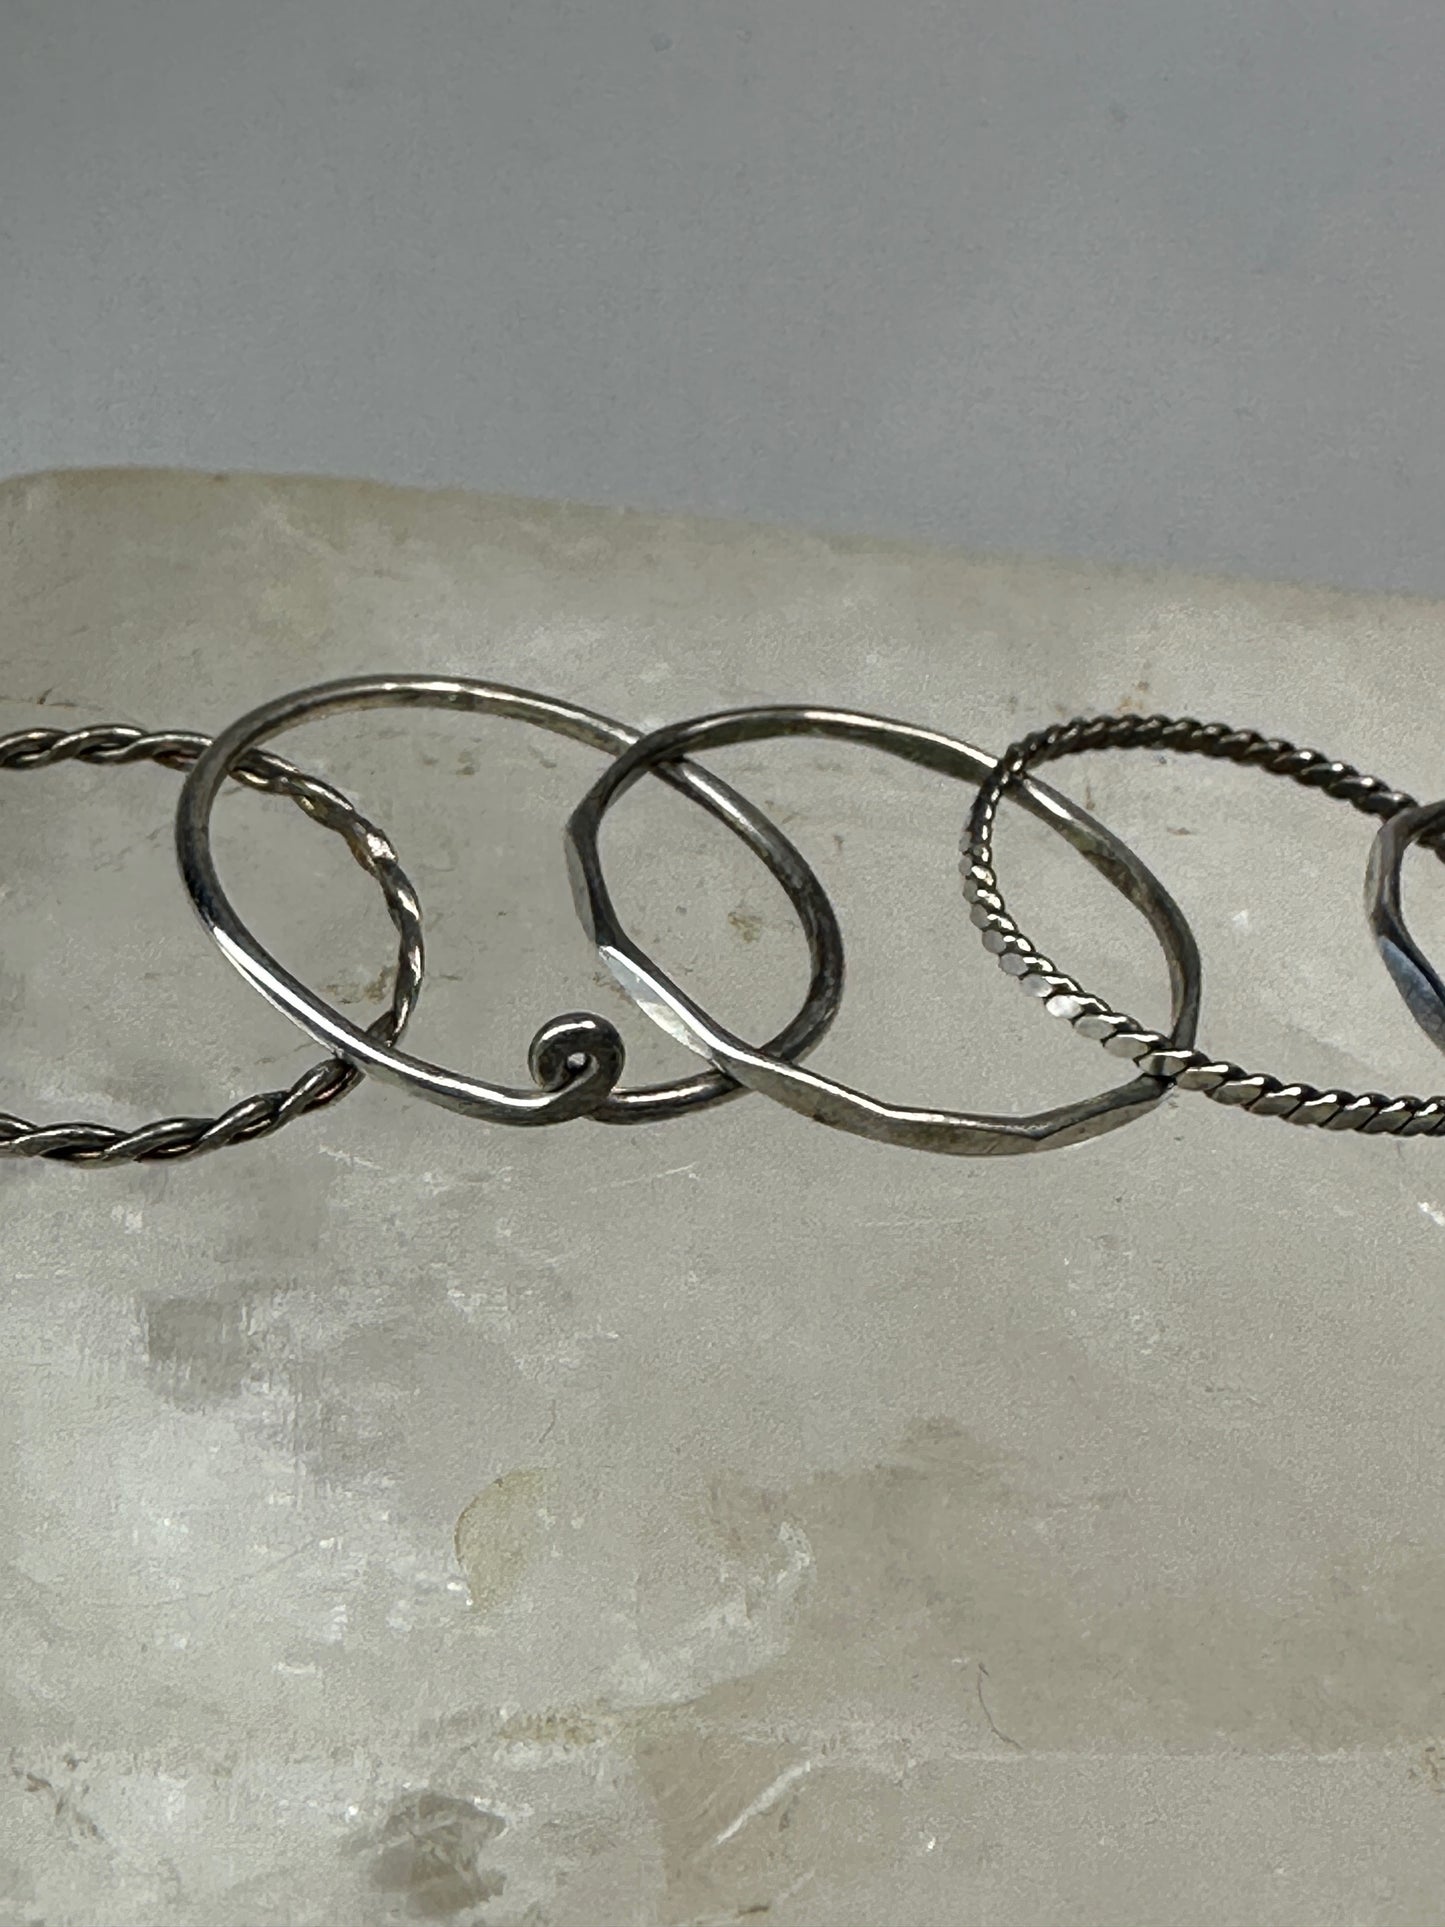 5 Slender ring stacker band size 6.25 sterling  silver women girls rings bands